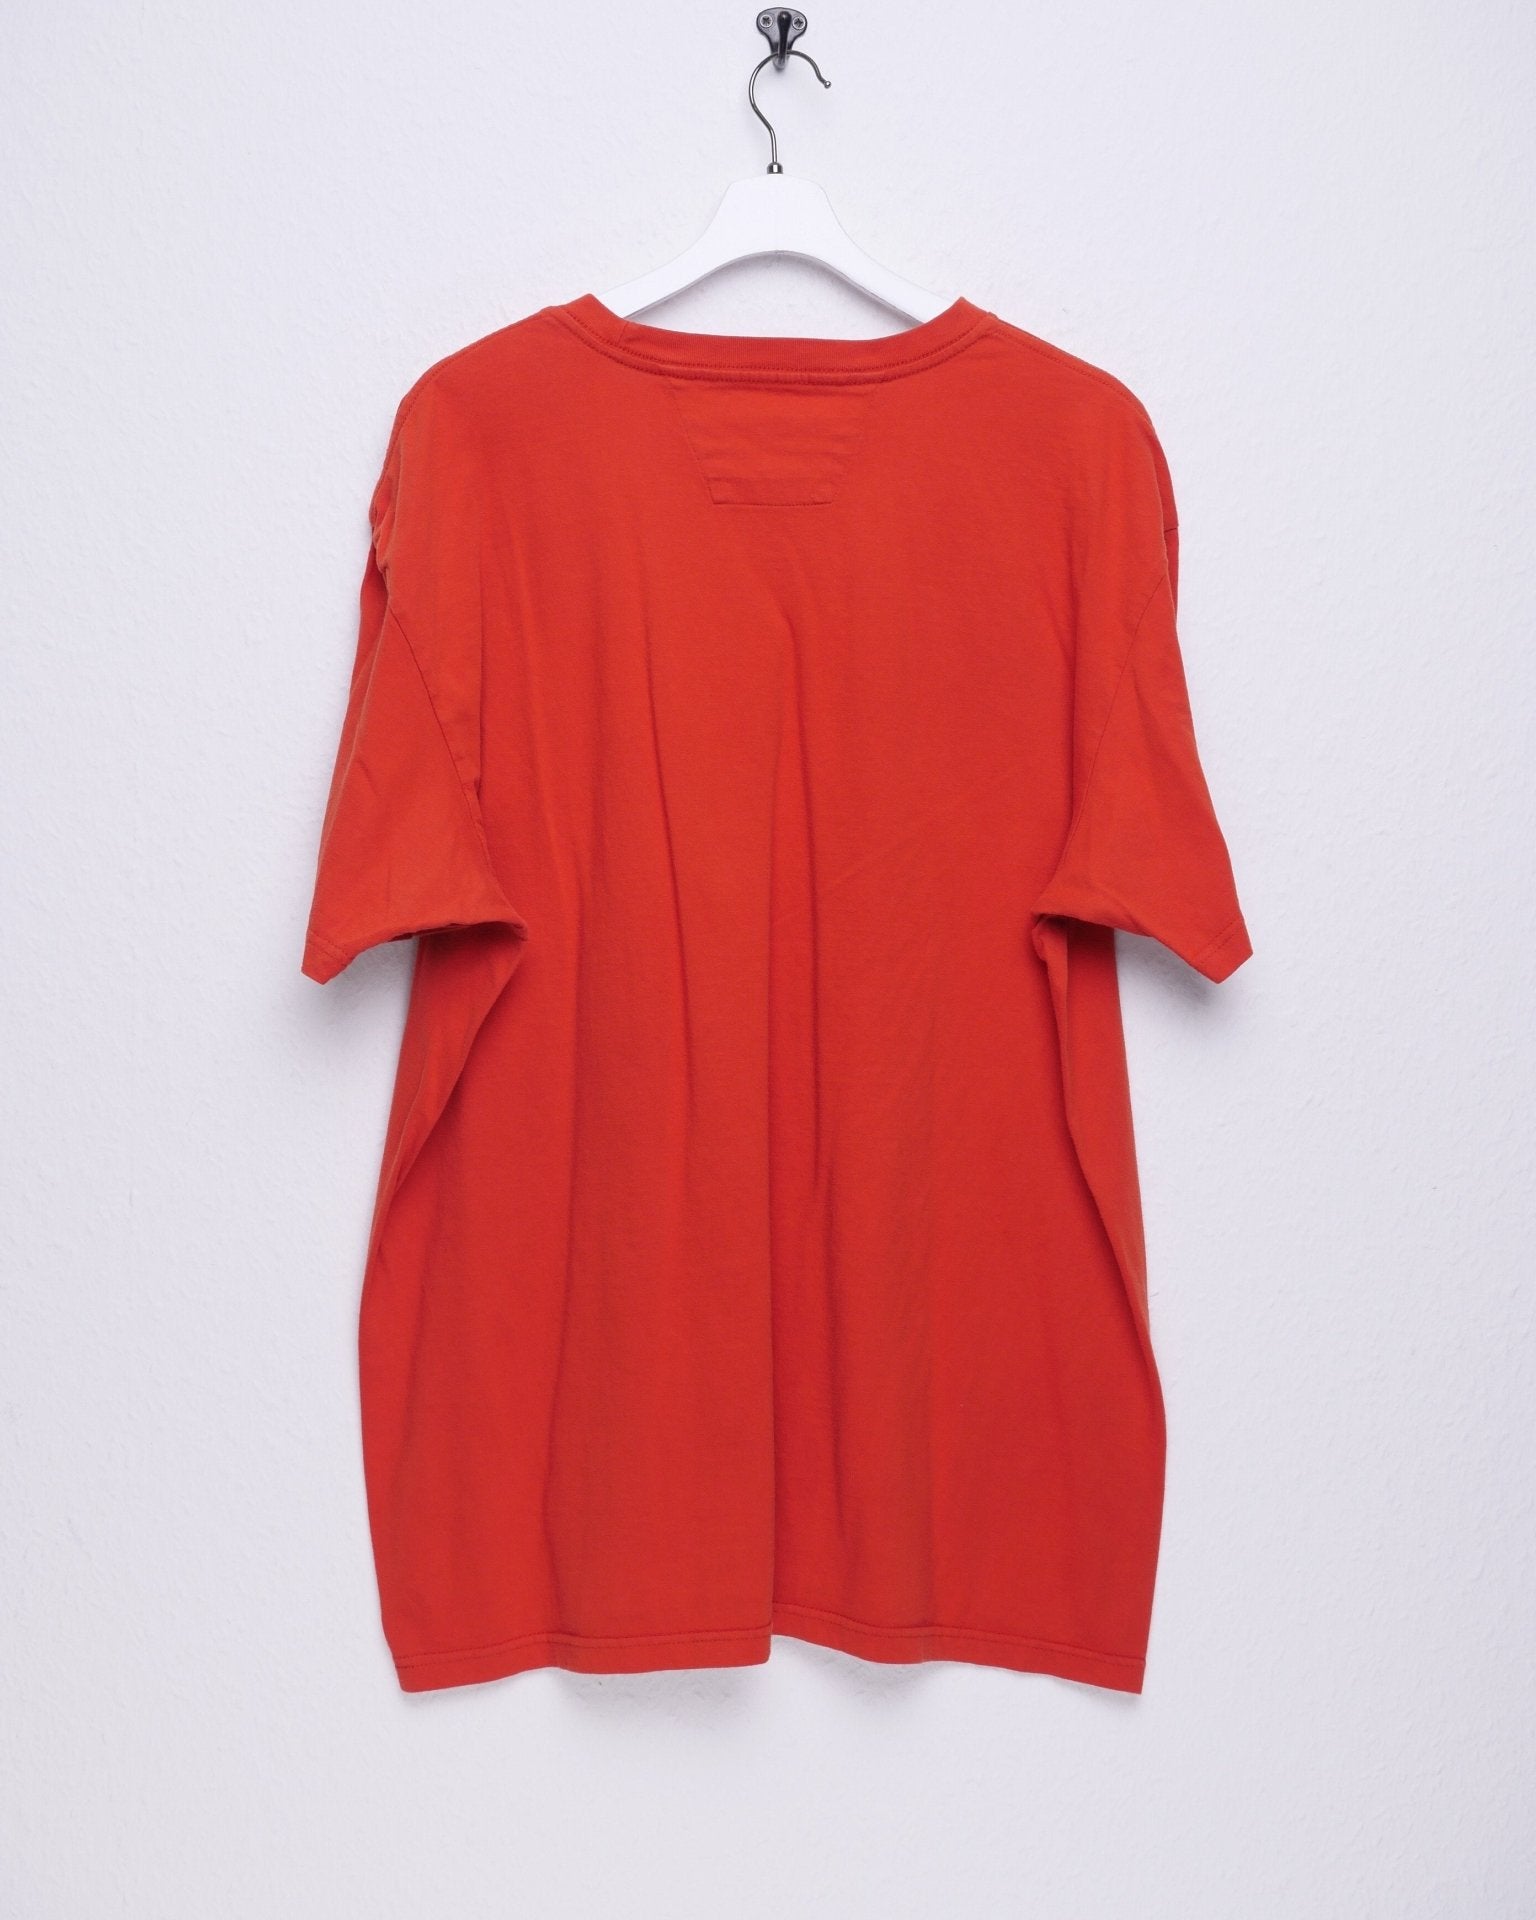 nautica printed Spellout orange Shirt - Peeces